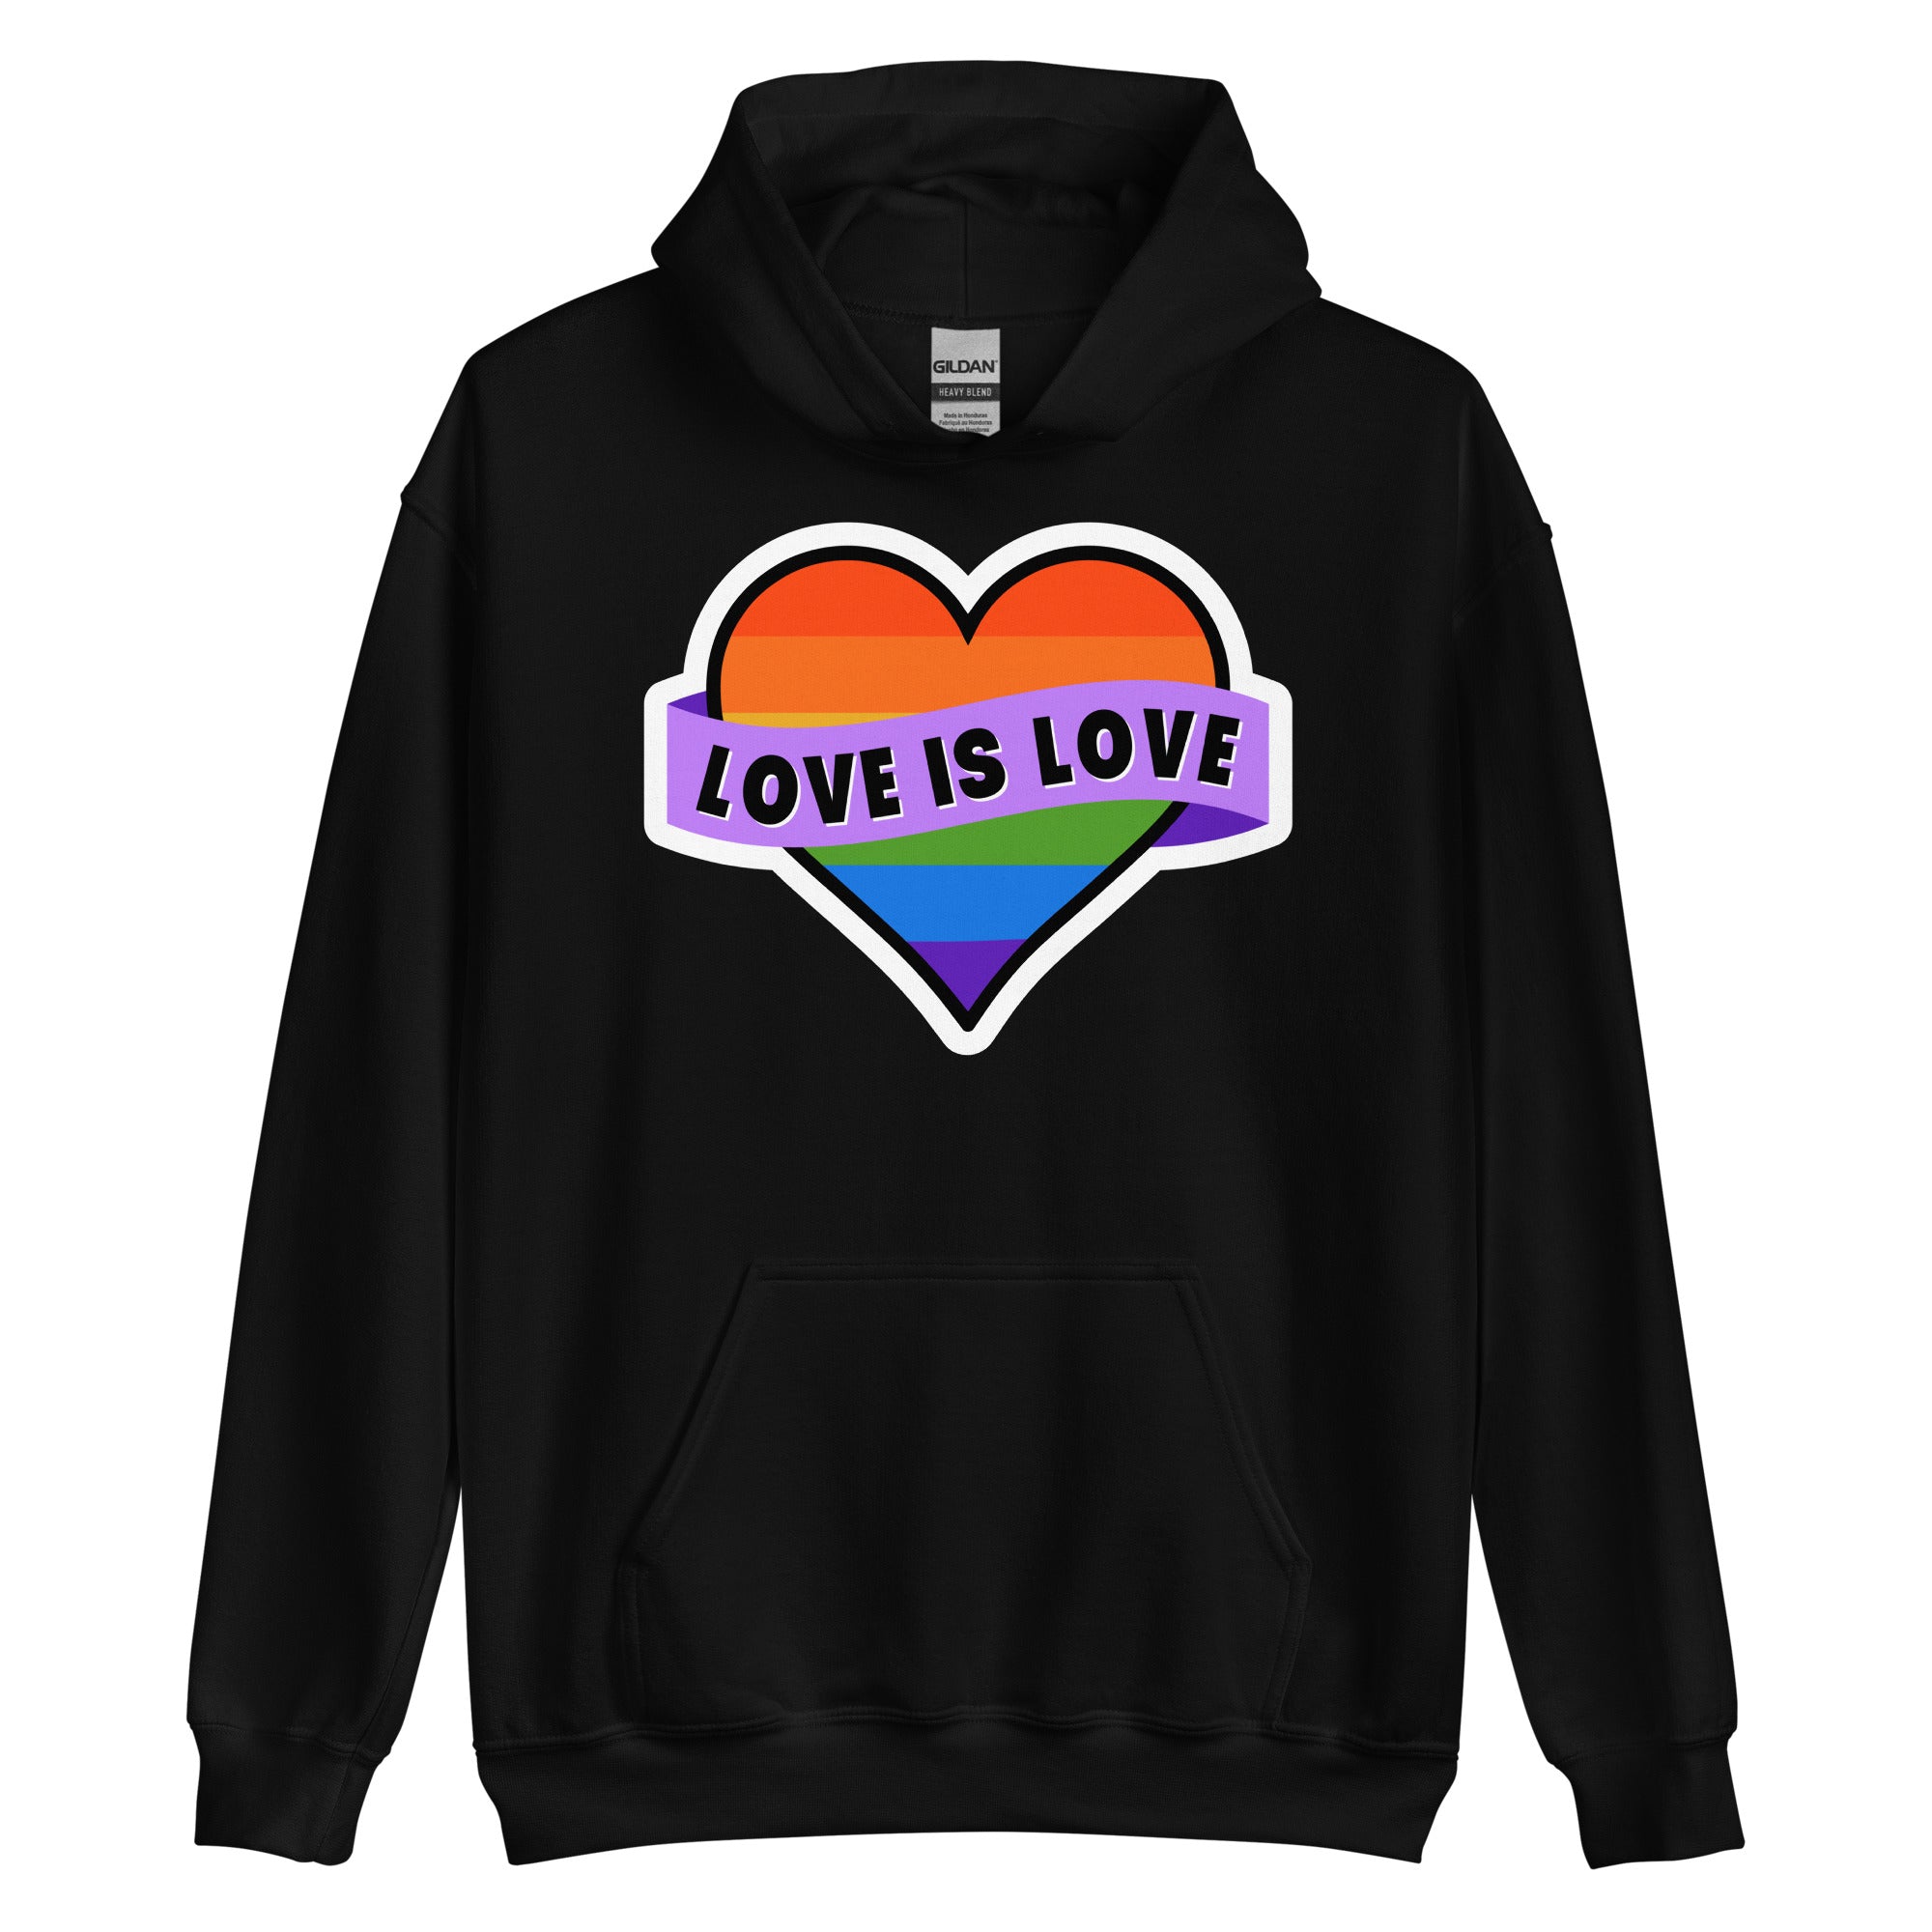 LOVE IS LOVE Unisex Sweat Shirt